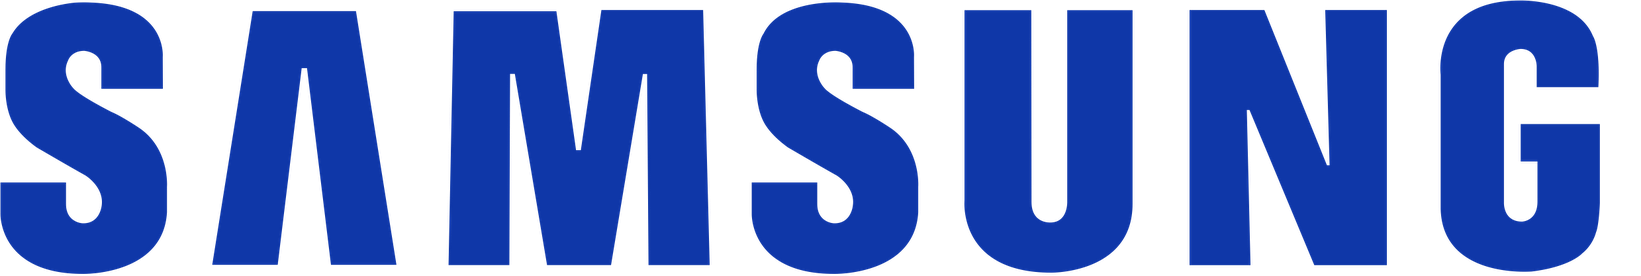 Samsung-Logo-png-1.png